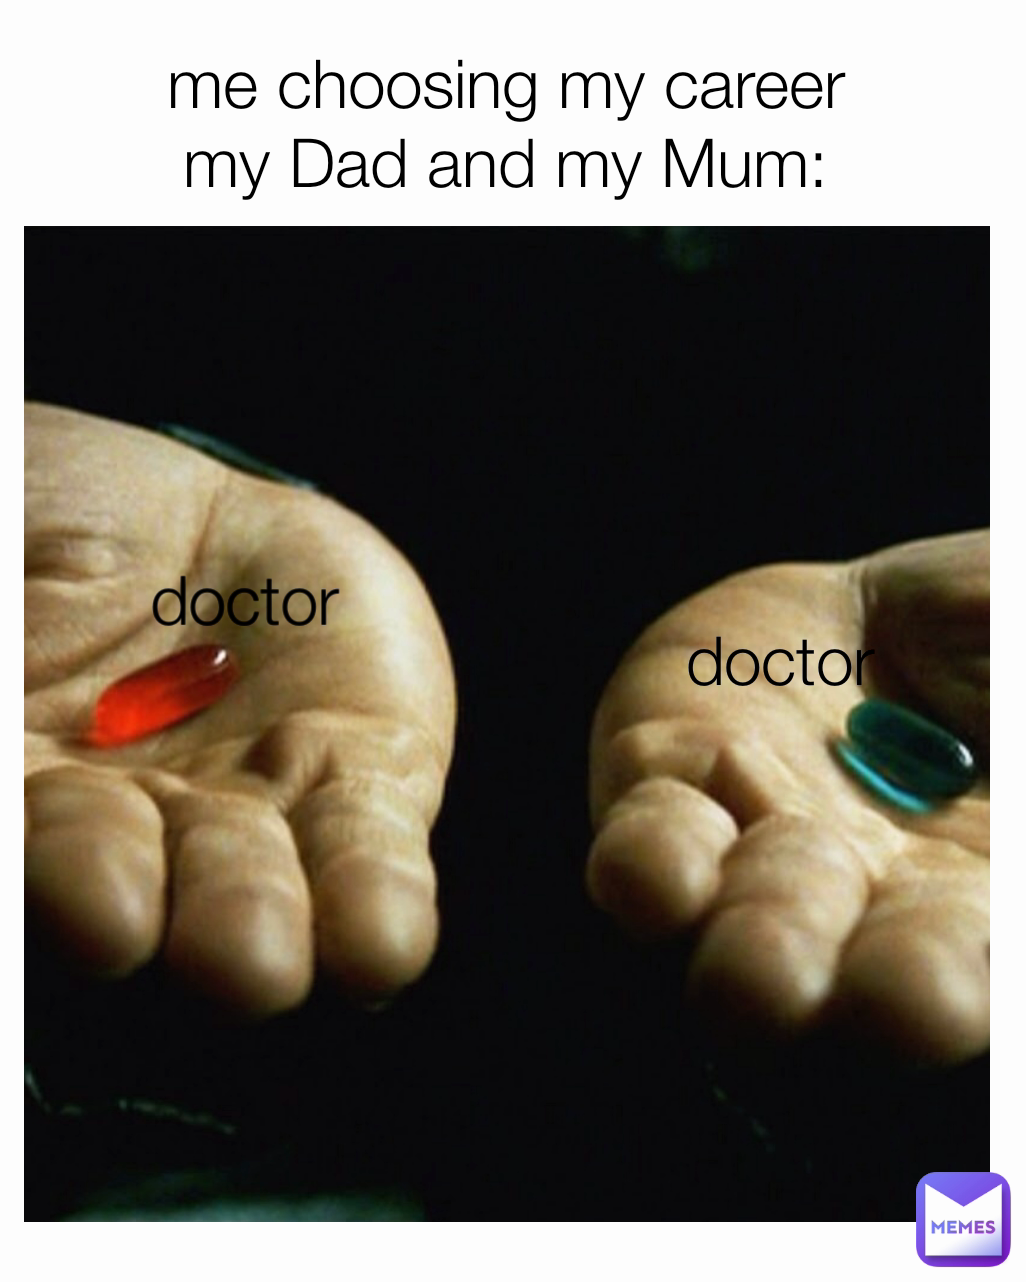 doctor doctor me choosing my career
my Dad and my Mum: